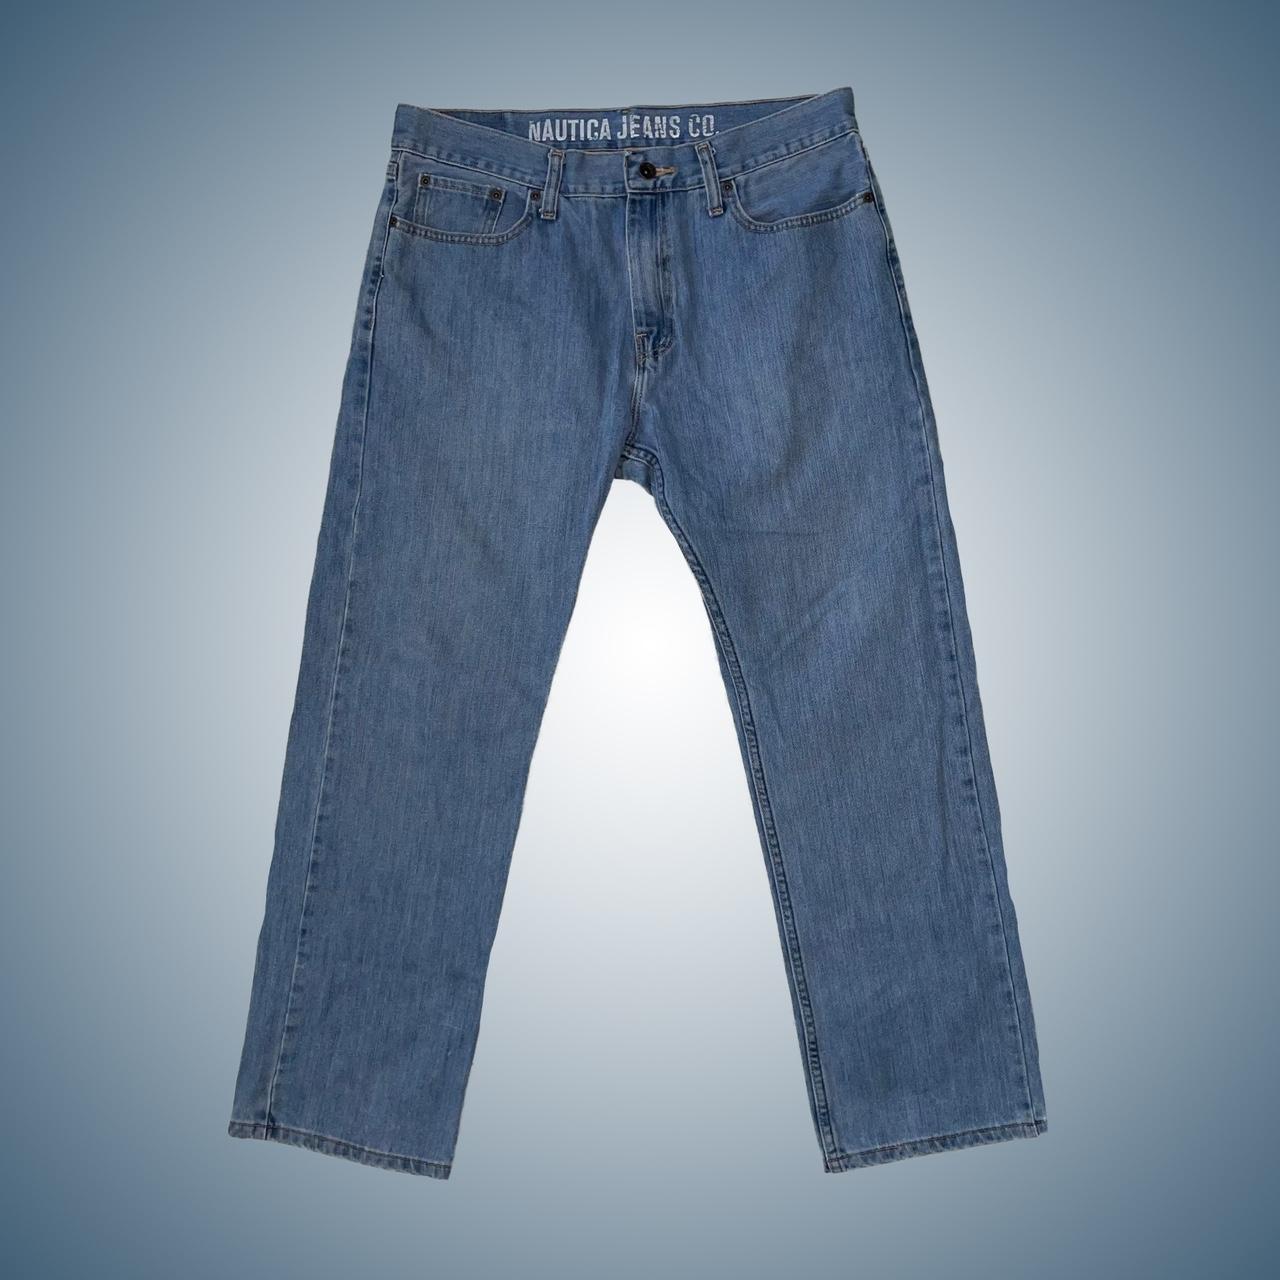 Nautica Men's Blue Jeans (3)